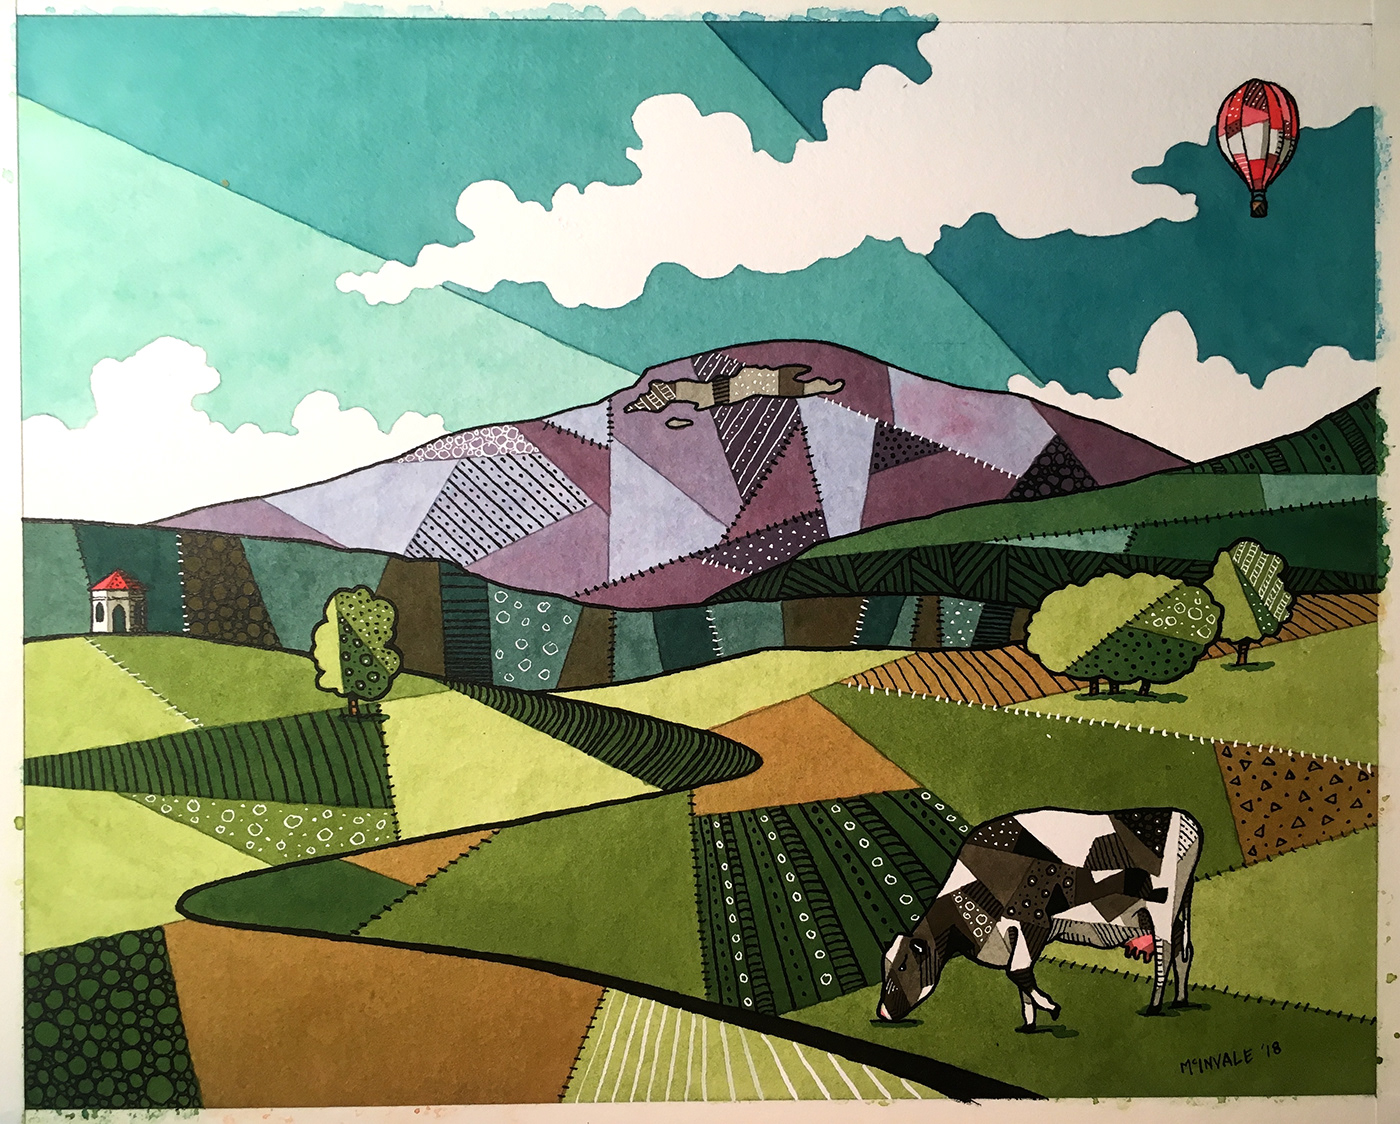 Georgia North Georgia quilt design pattern Landscape balloon cow mountain Poster Design